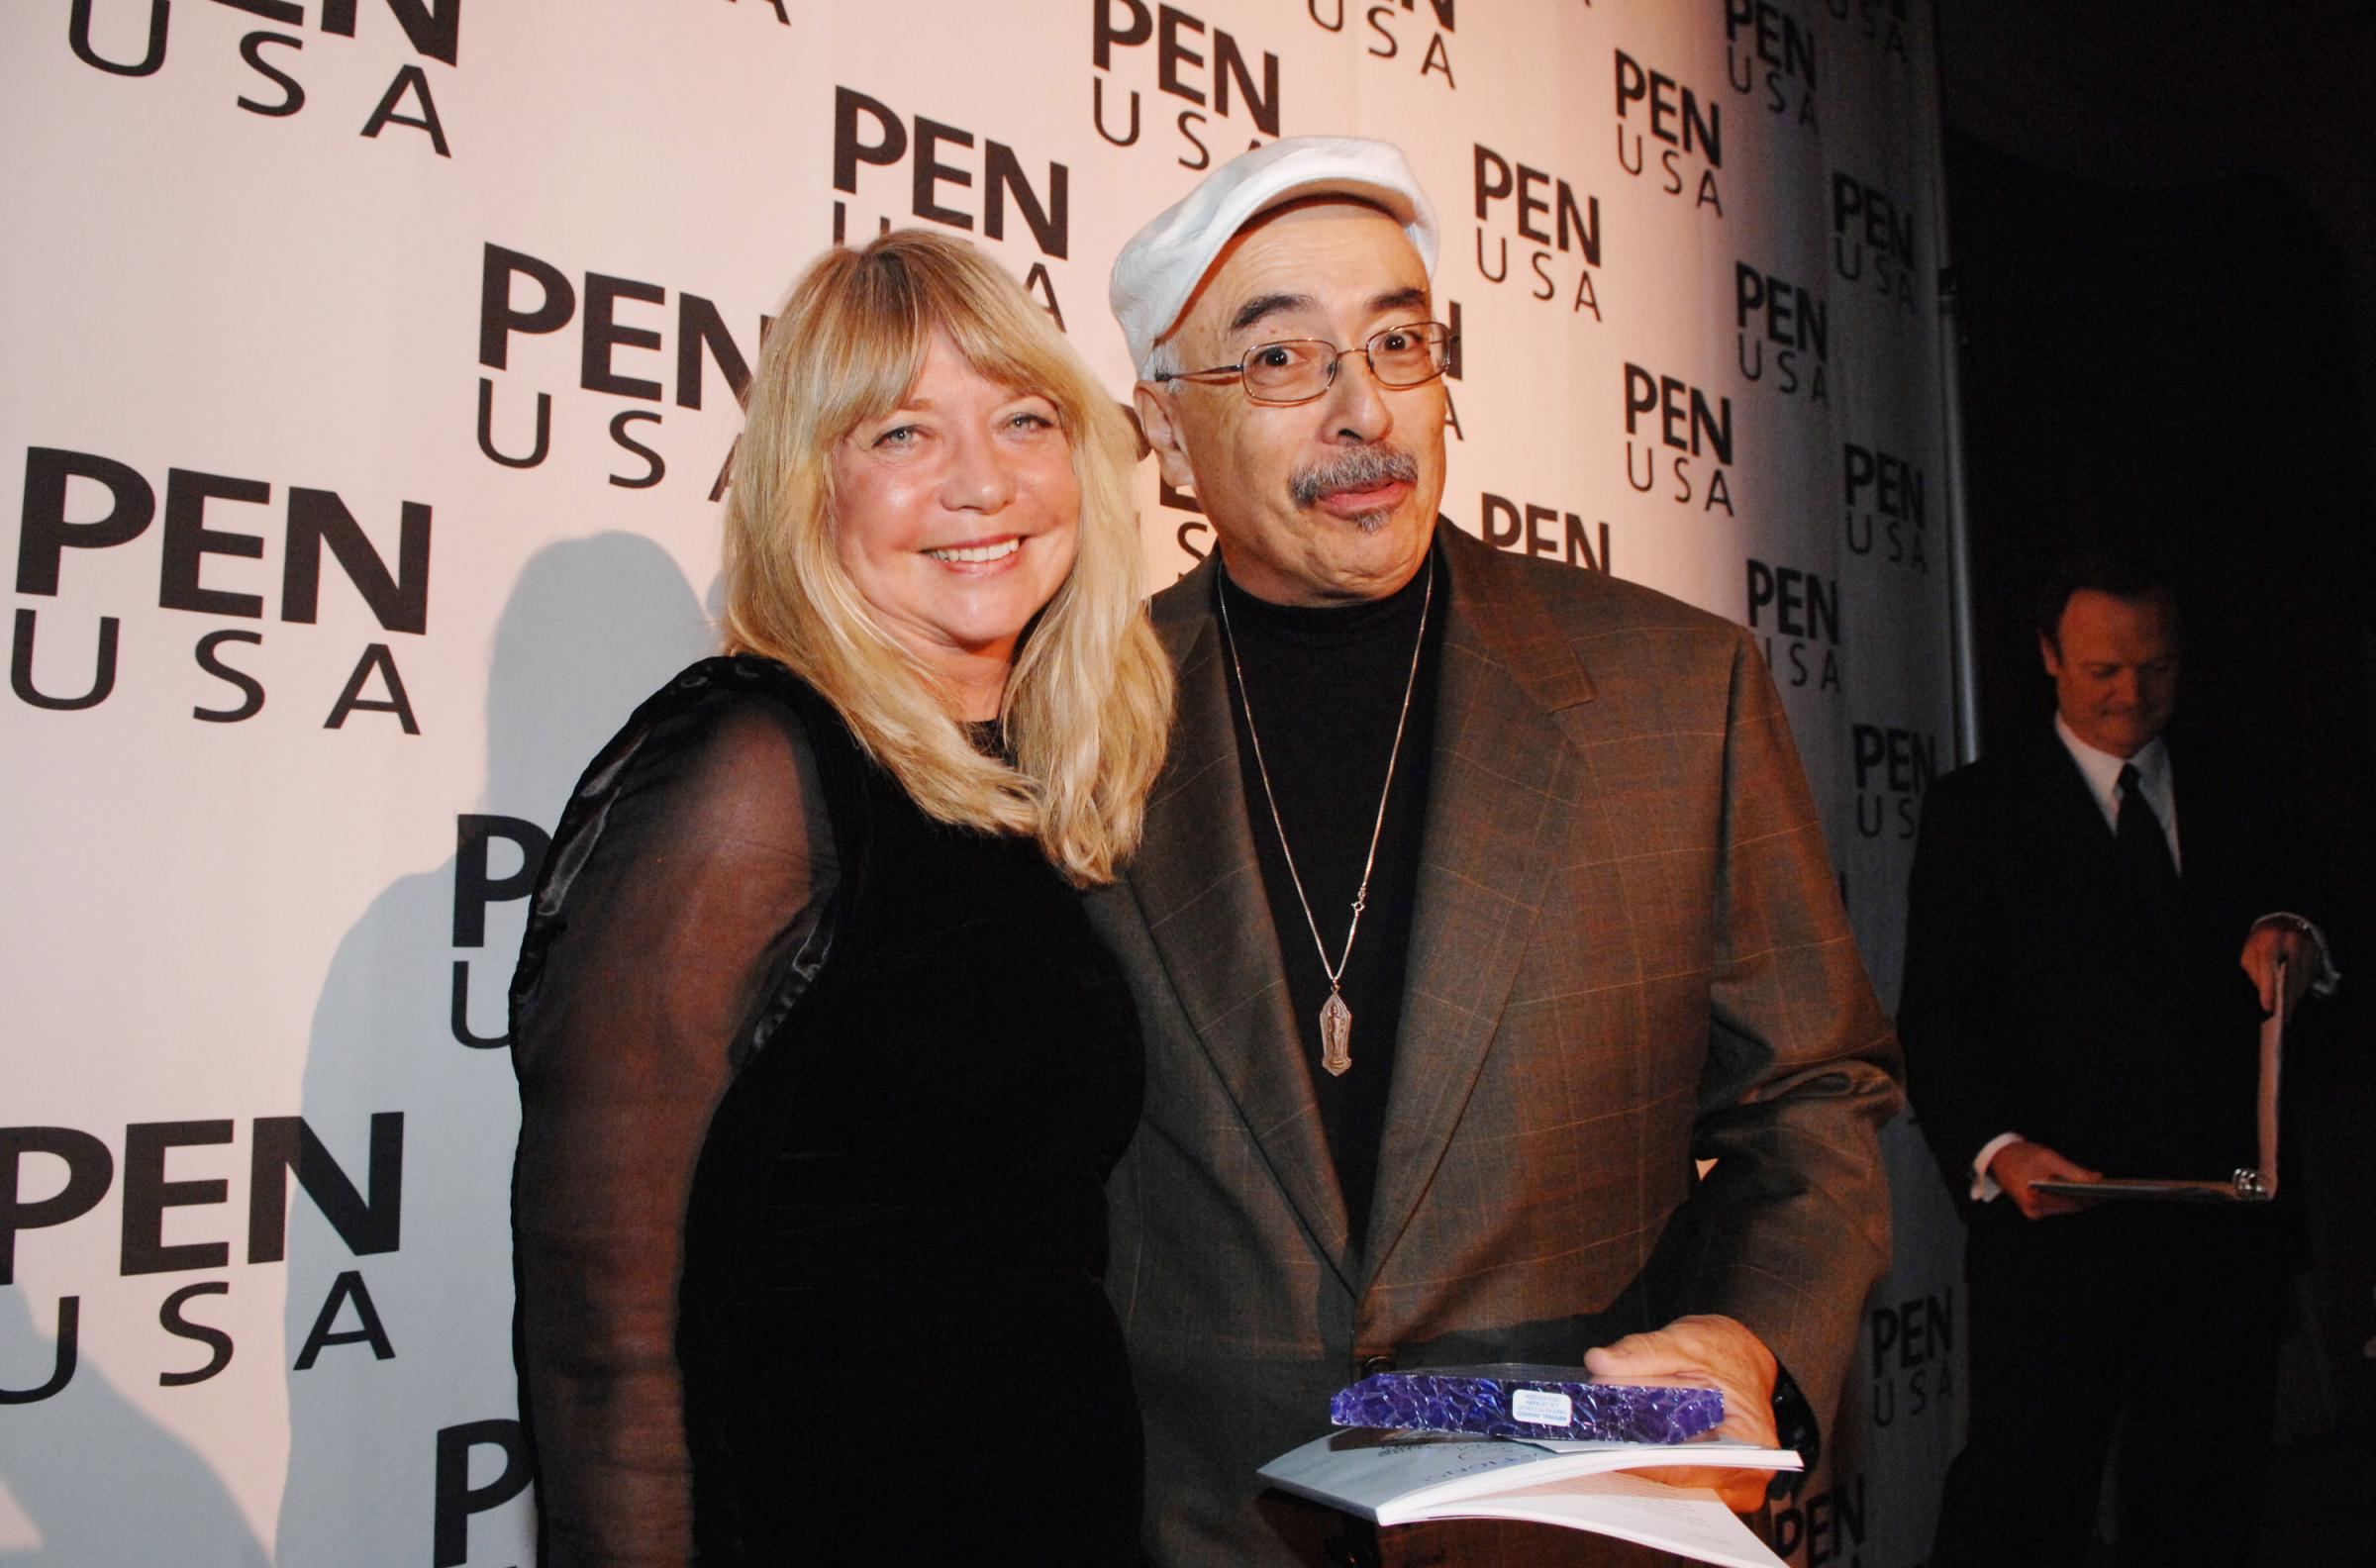 Carol Muske-Dukes (L) presents the Poetry Award to Juan Felipe Herrera (R) at the 18th Annual PEN USA Literary Festival in Los Angeles on Dec. 3, 2008.